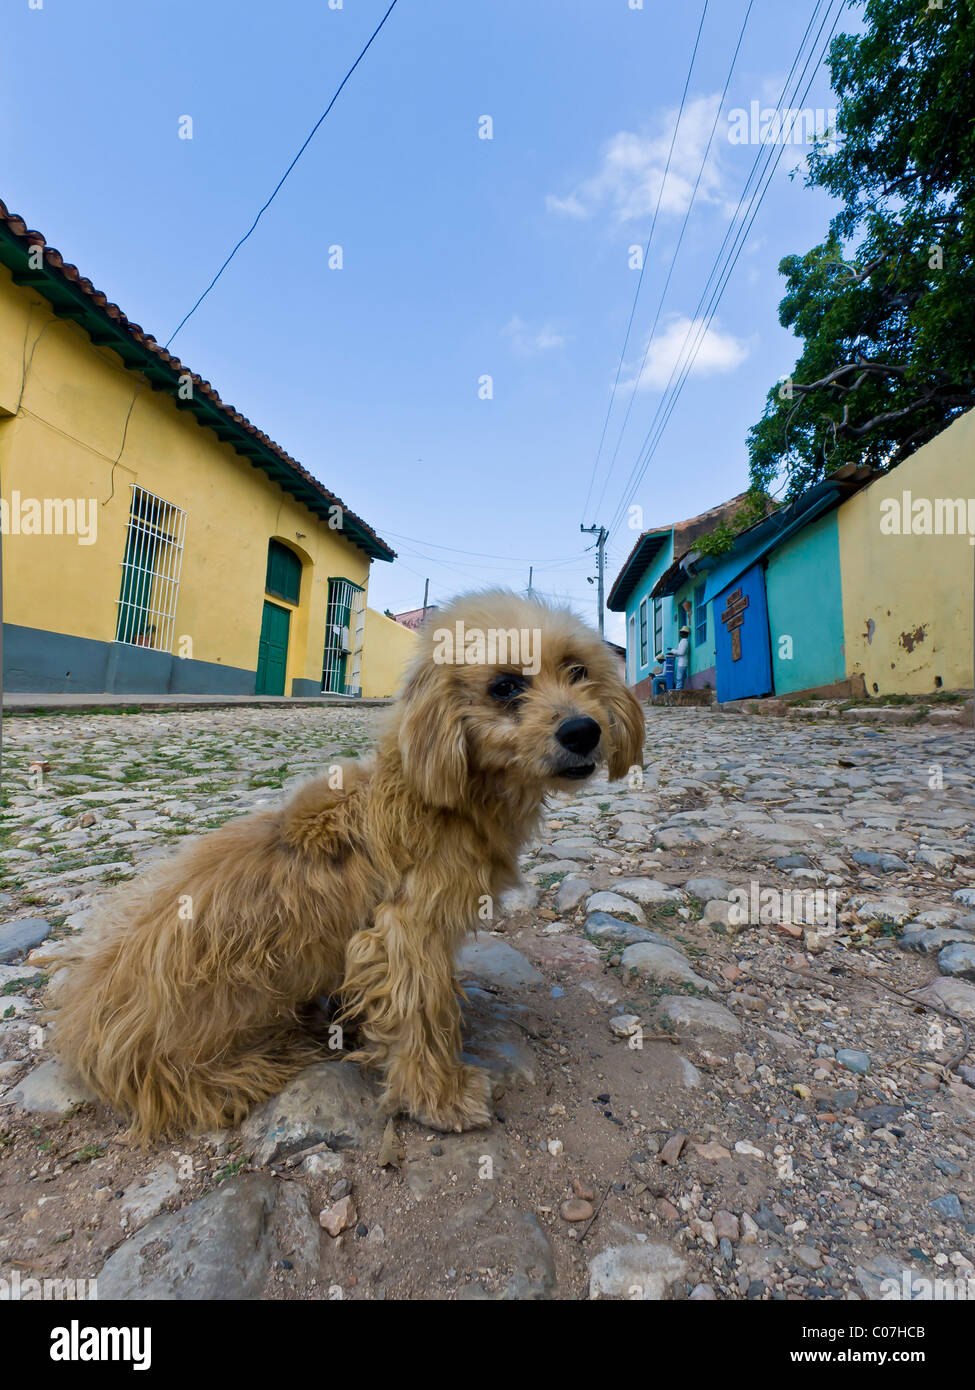 Cane su strade acciottolate Trinidad provincia di Sancti Spíritus, Cuba centrale Foto Stock